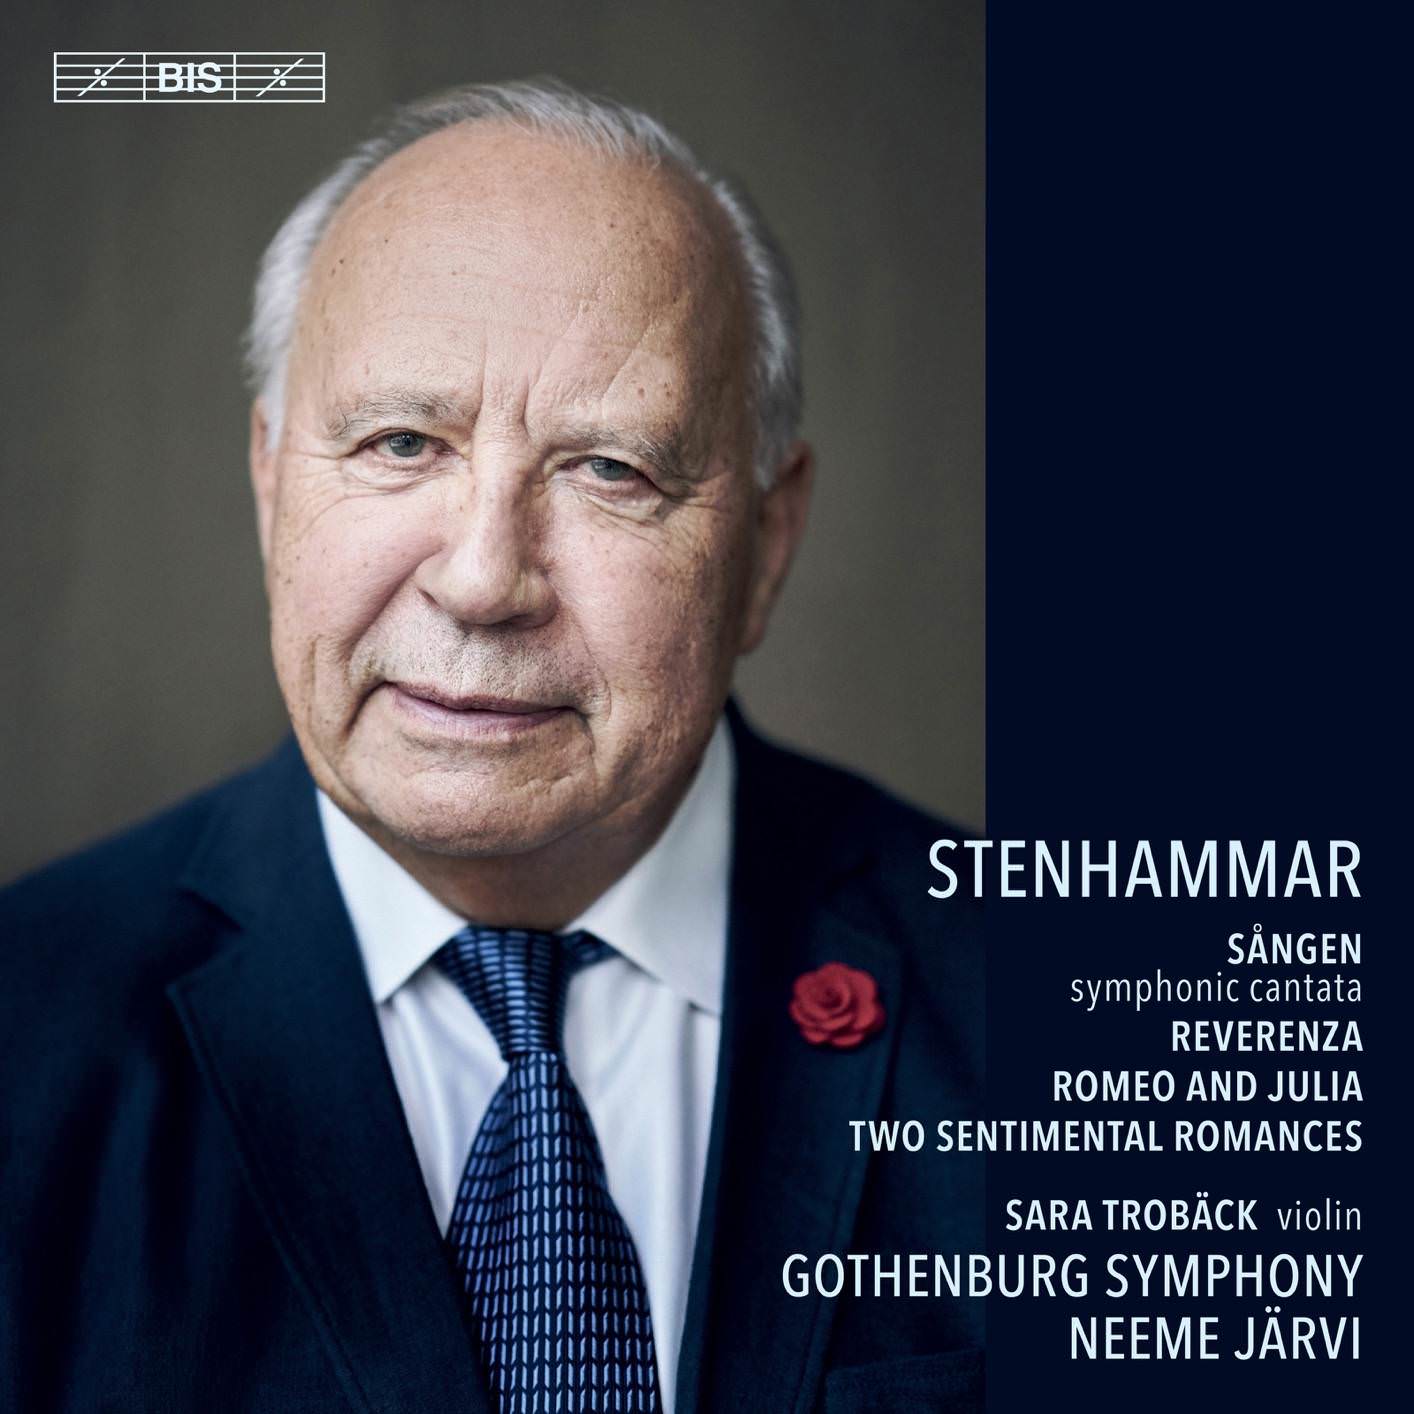 Goteborgs Symfoniker & Neeme Jarvi - Stenhammar: Sången, Reverenza & Romeo och Julia Suite (2018) [FLAC 24bit/96kHz]